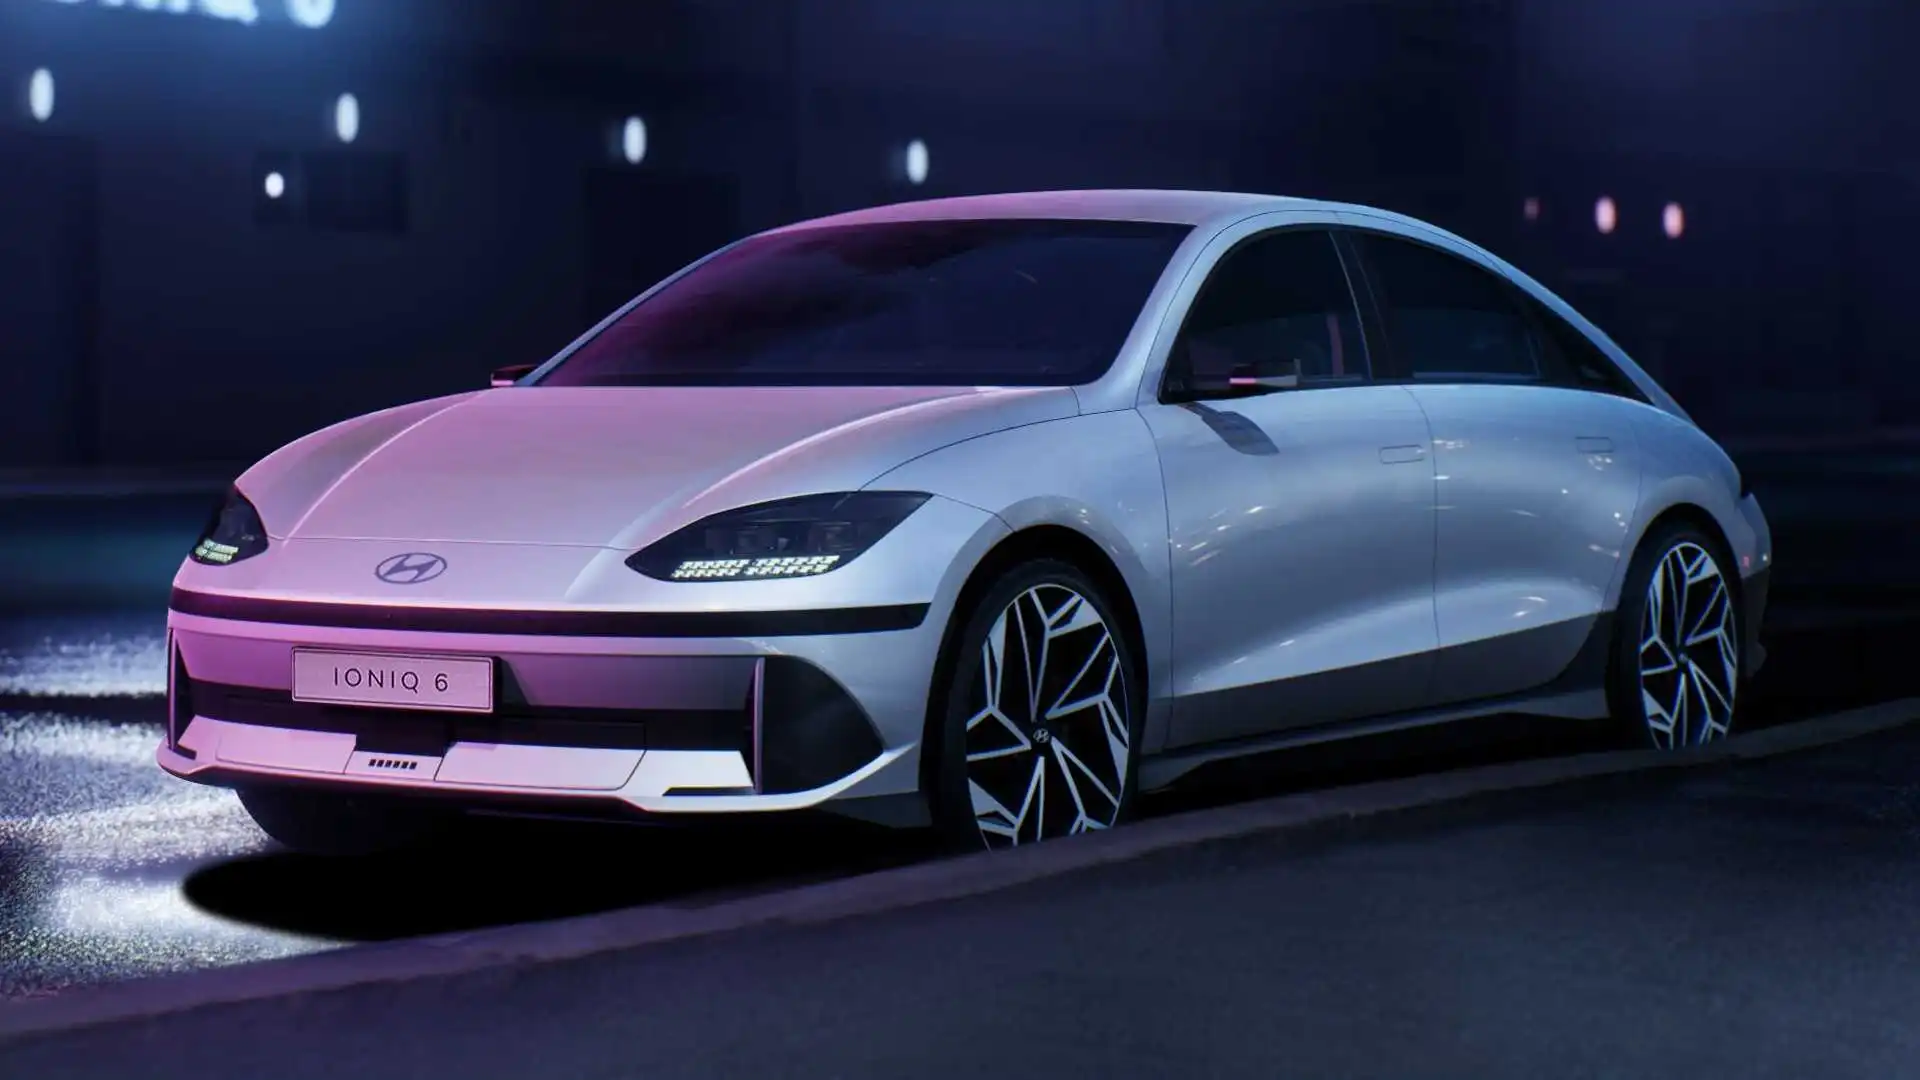 Hyundai's nieuwe elektrische sedan Ioniq 6 wordt geïntroduceerd: